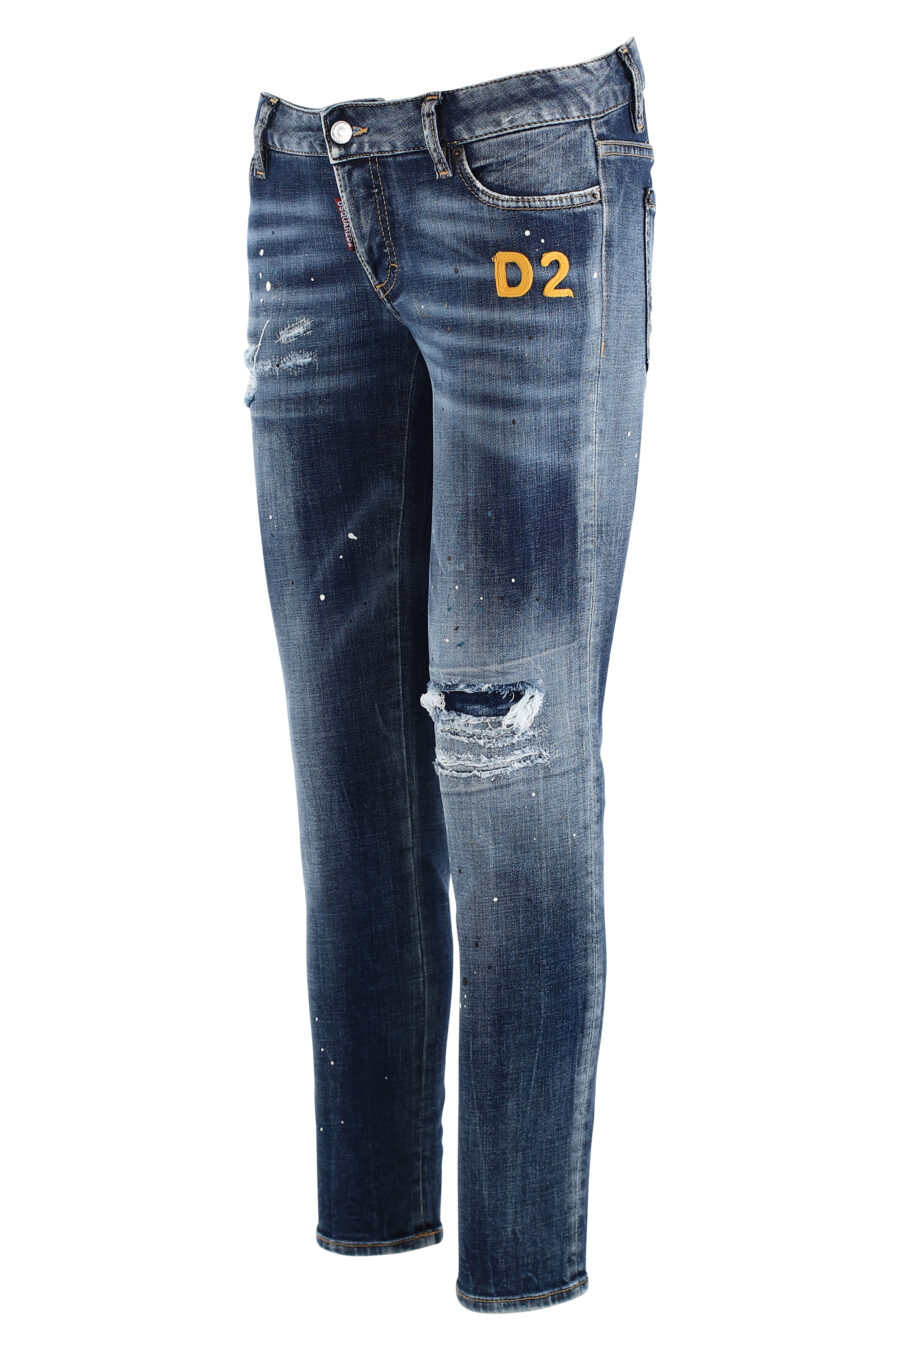 Jean bleu Jennifer cropped jean avec broderie jaune - IMG 7586